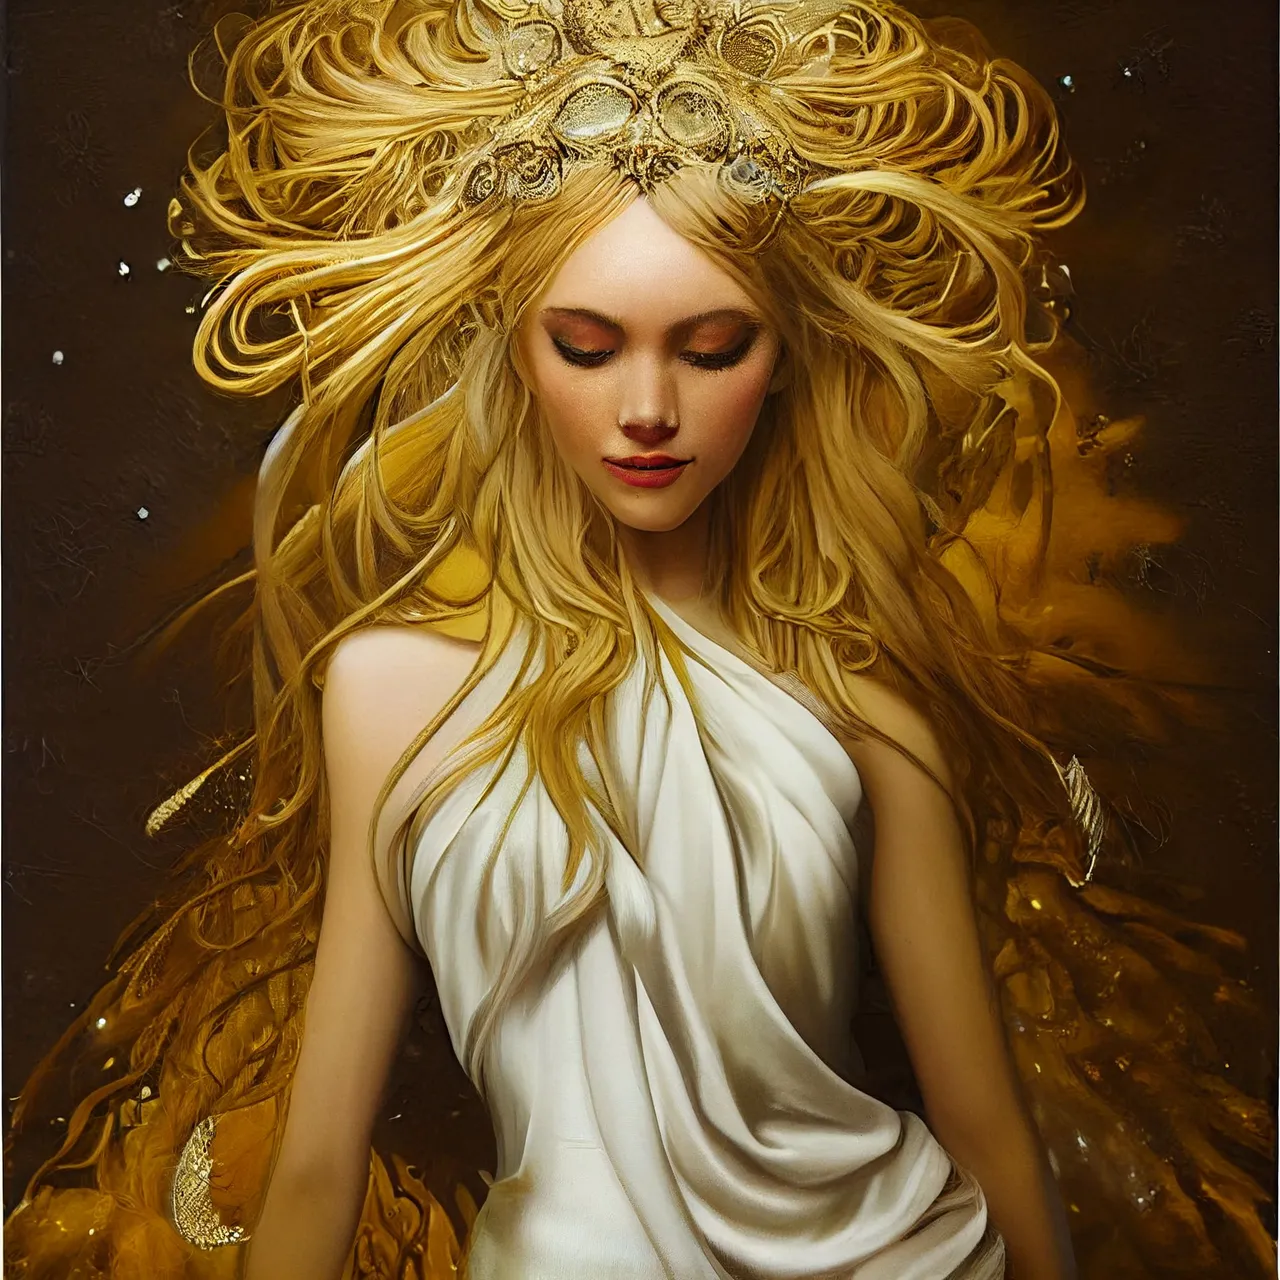 mamrita_wild_goddess_in_white_dress_golden_shimmer_blond_bb6b15dc-0891-4fda-92bd-802a11ae7c16.png